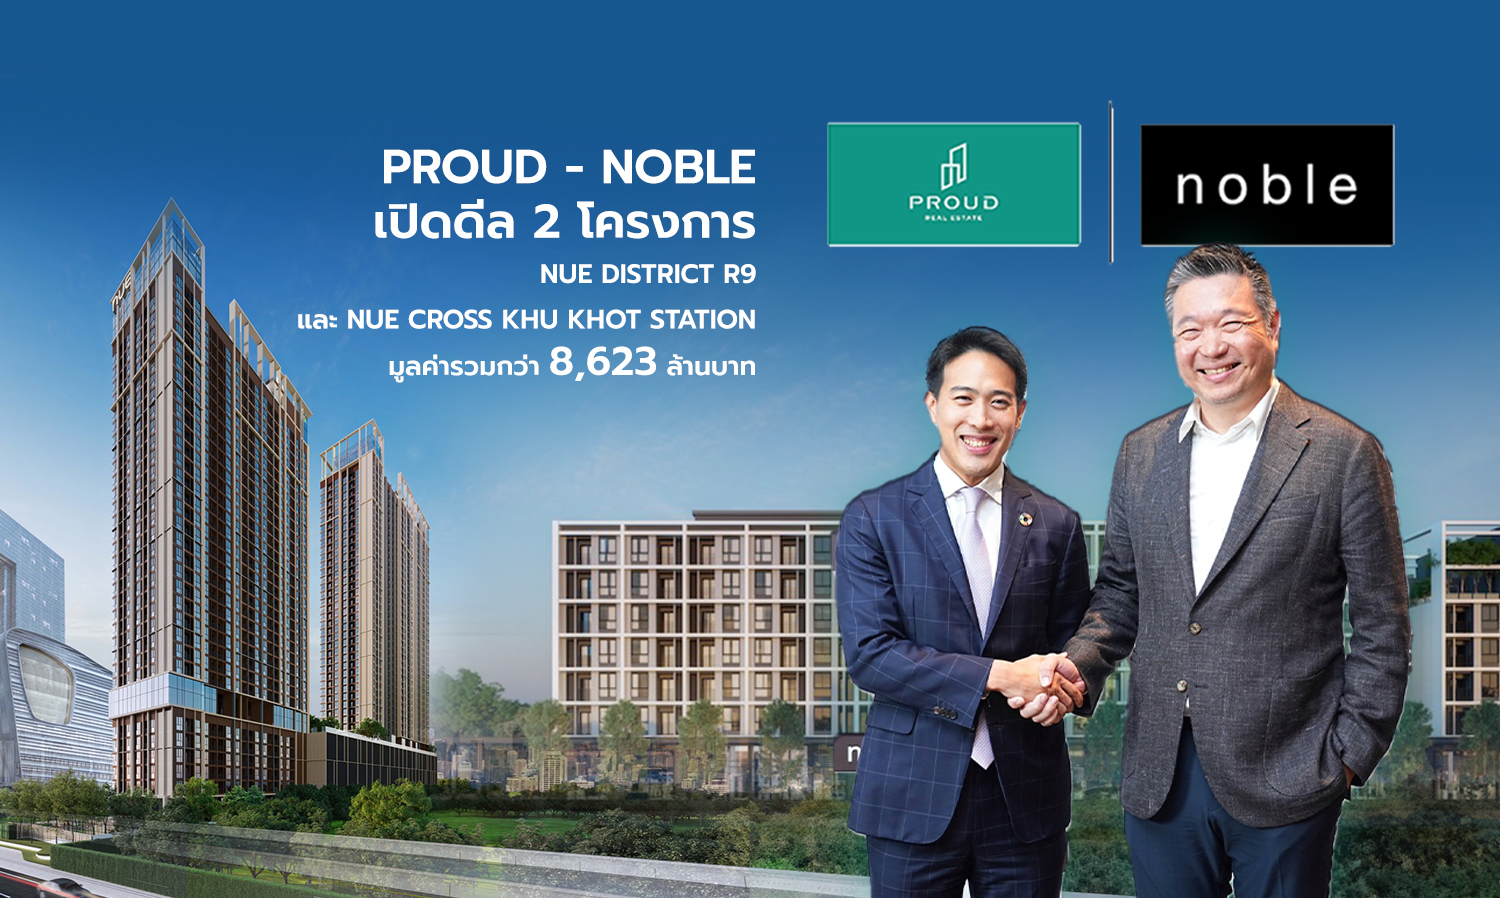 PROUD - NOBLE เปิดดีล 2 โครงการ  Nue District R9 และ Nue Cross Khu Khot Station มูลค่าโครงการรวมกว่า 8,623 ล้านบาท